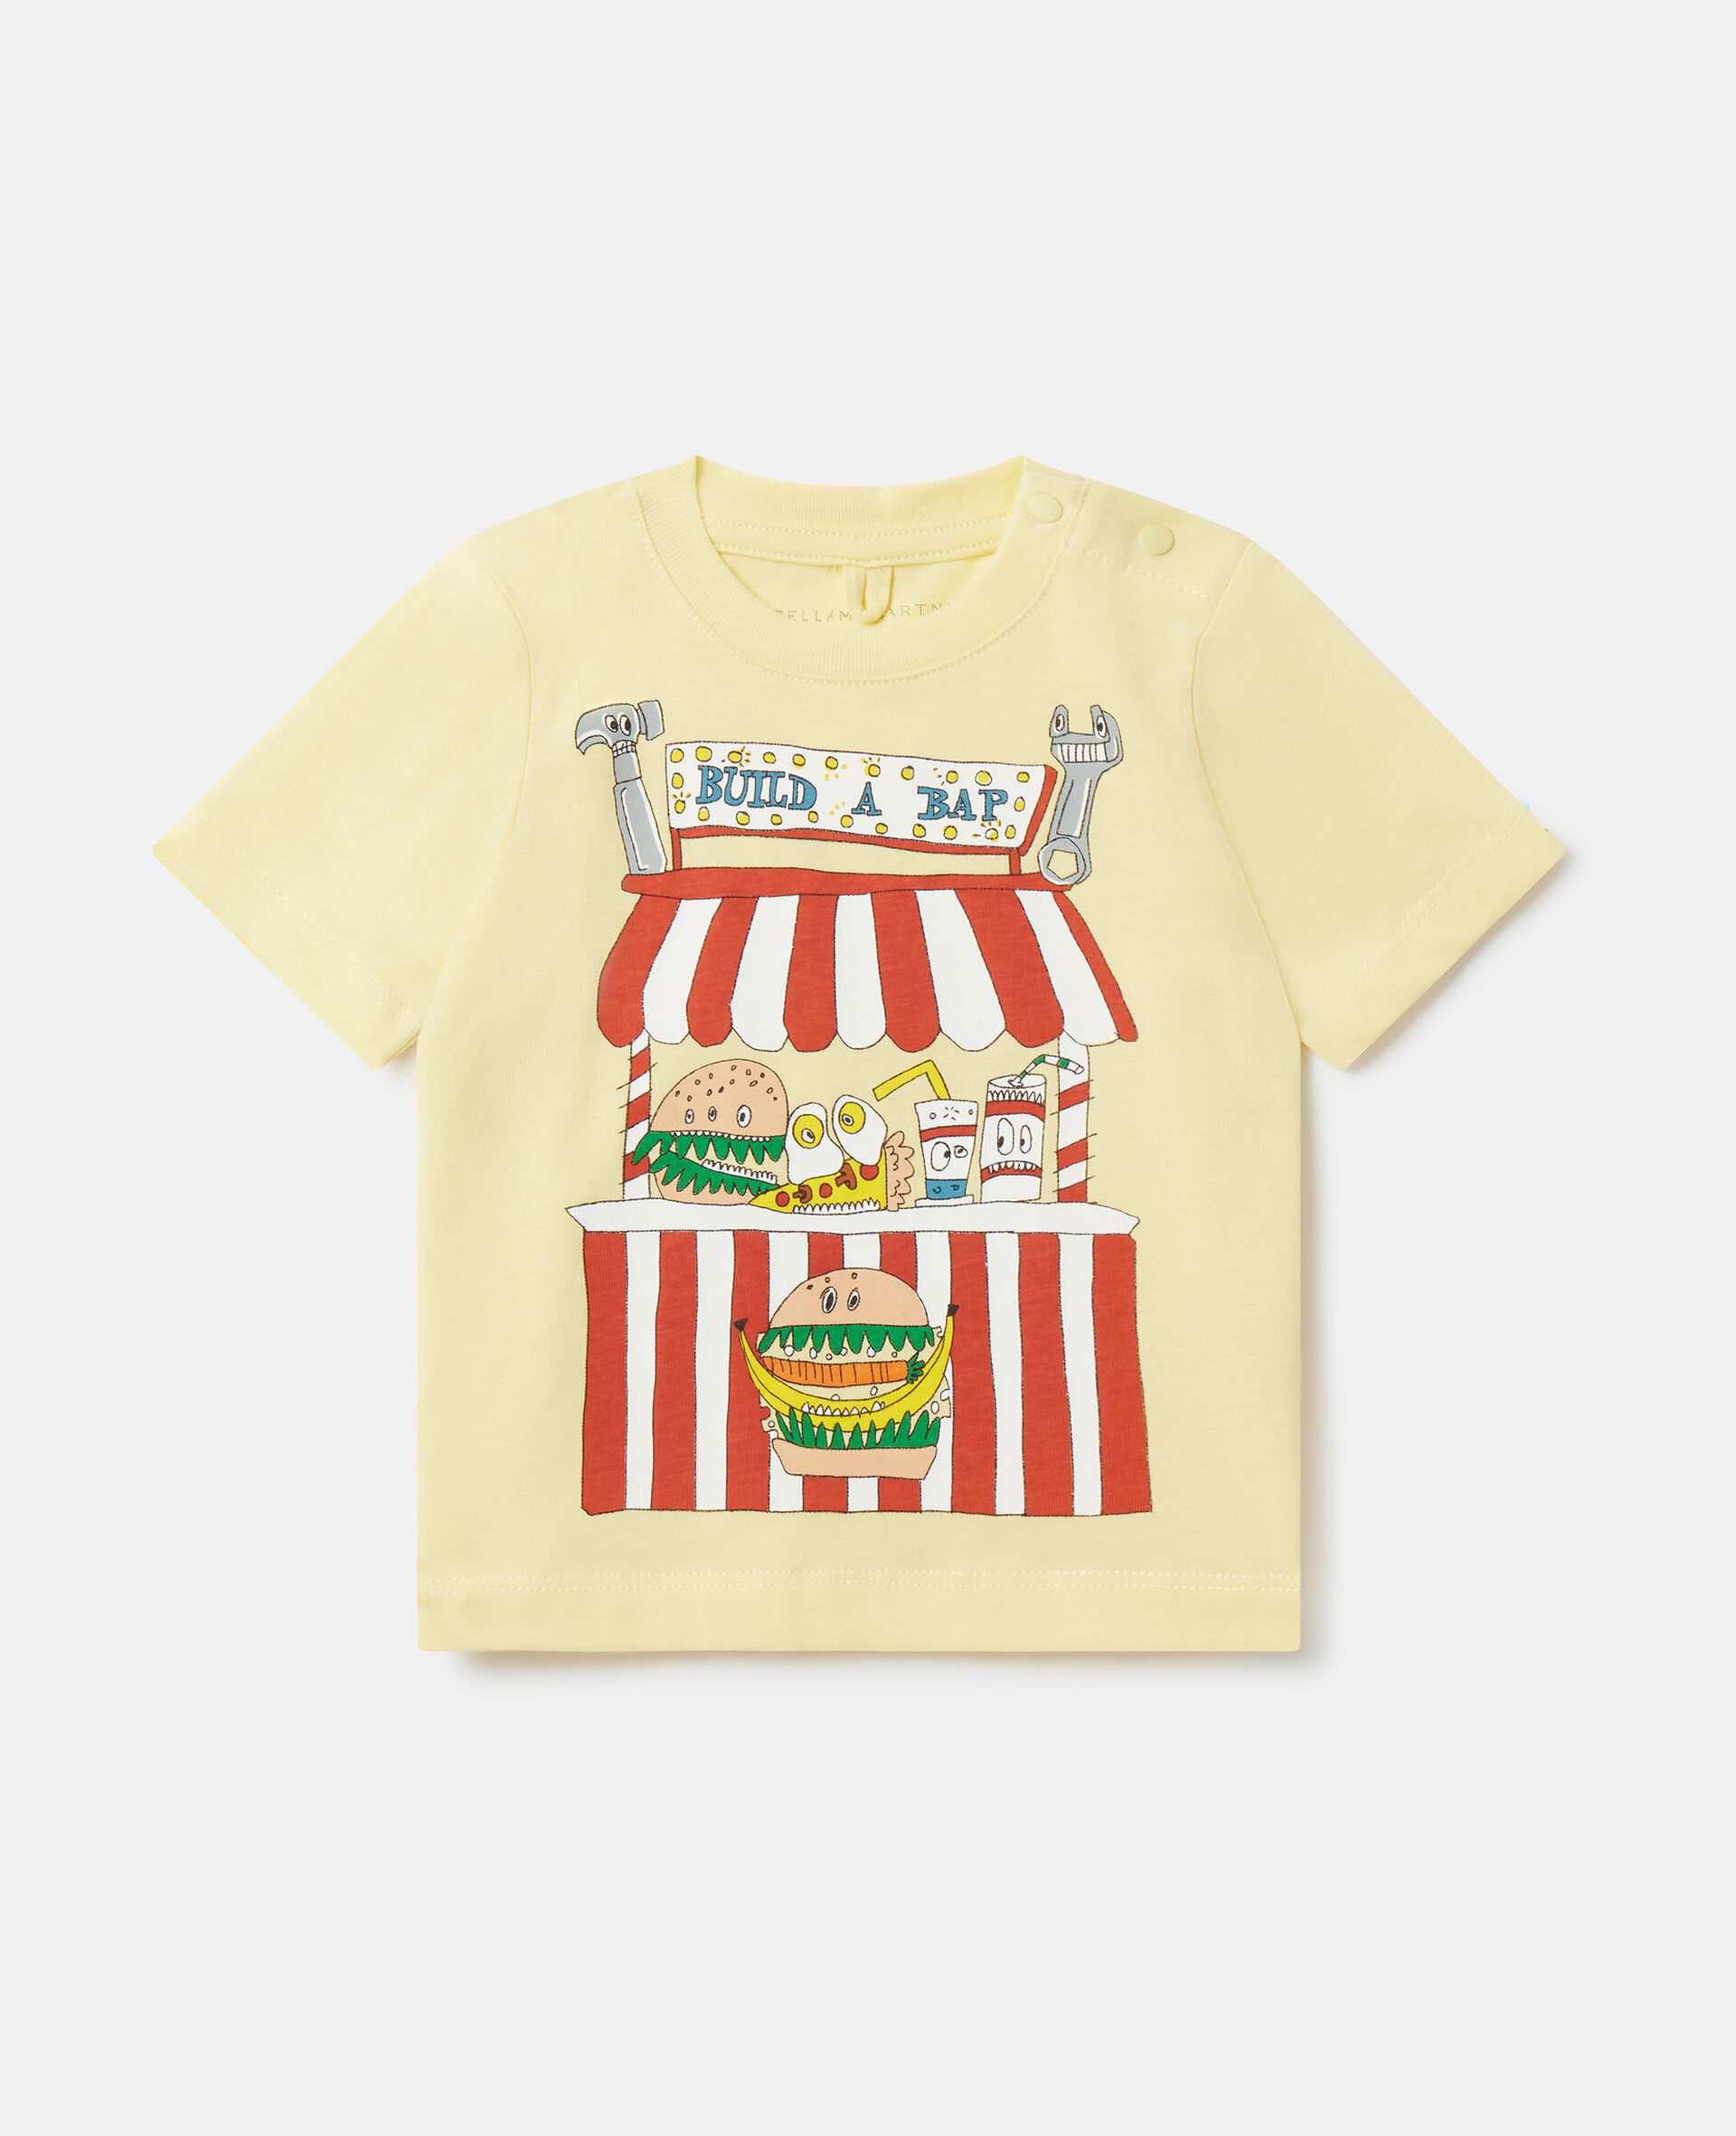 ‘Build A Bap’ 스톨 티셔츠-멀티컬러-medium